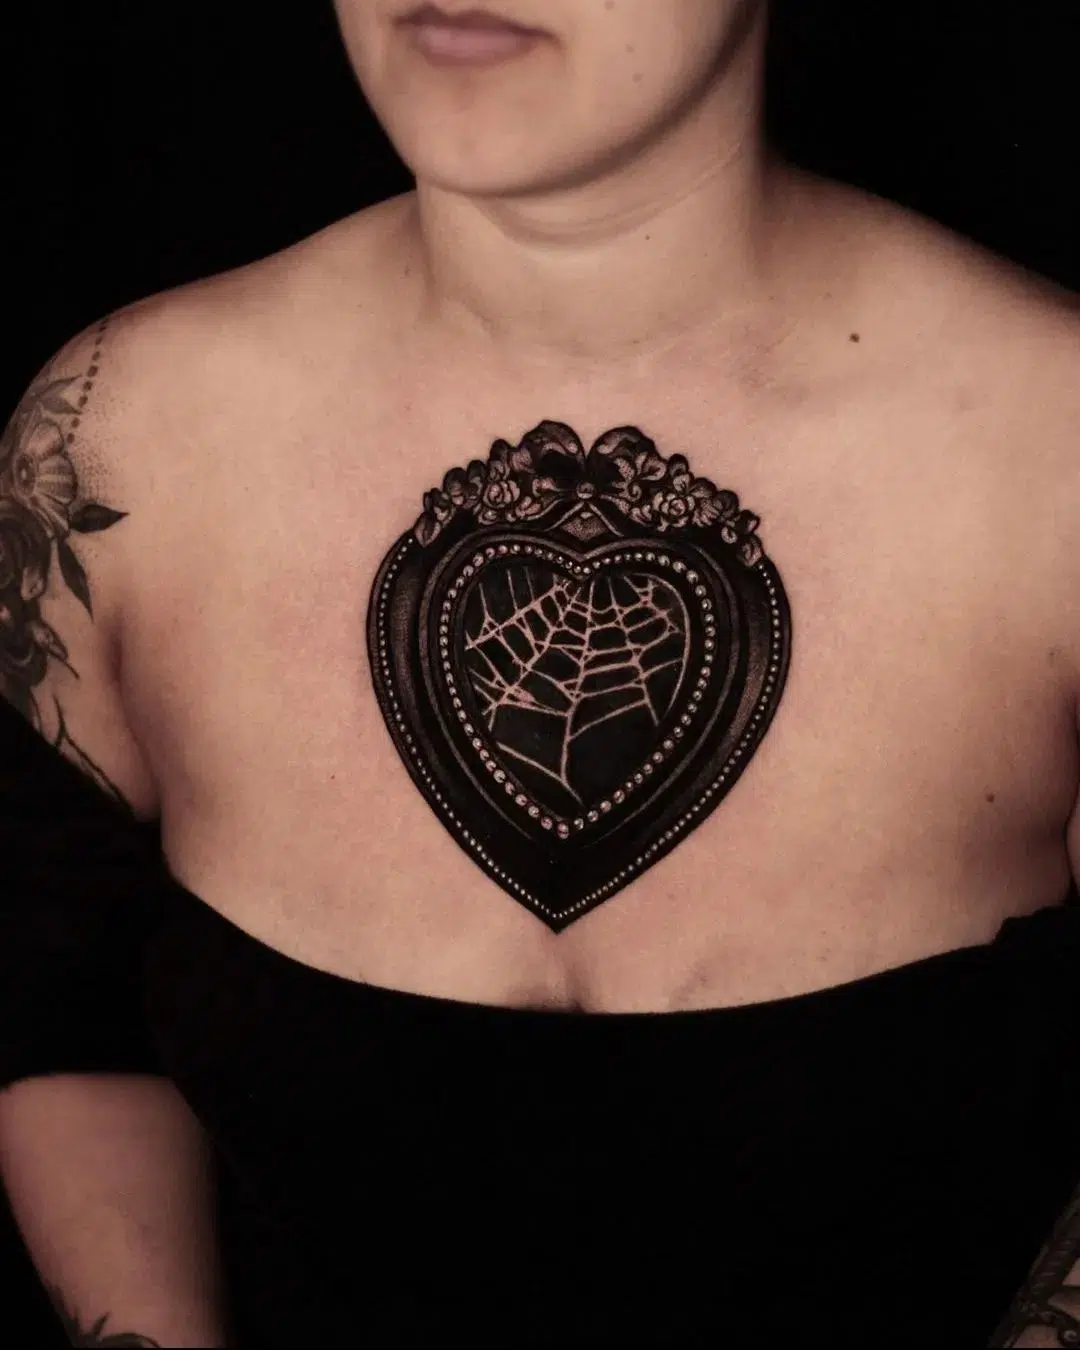 Black Tangled Heart.
Tattoo by Liz for the bestest returning customer Clarissa.

lizminellitattoo 

            